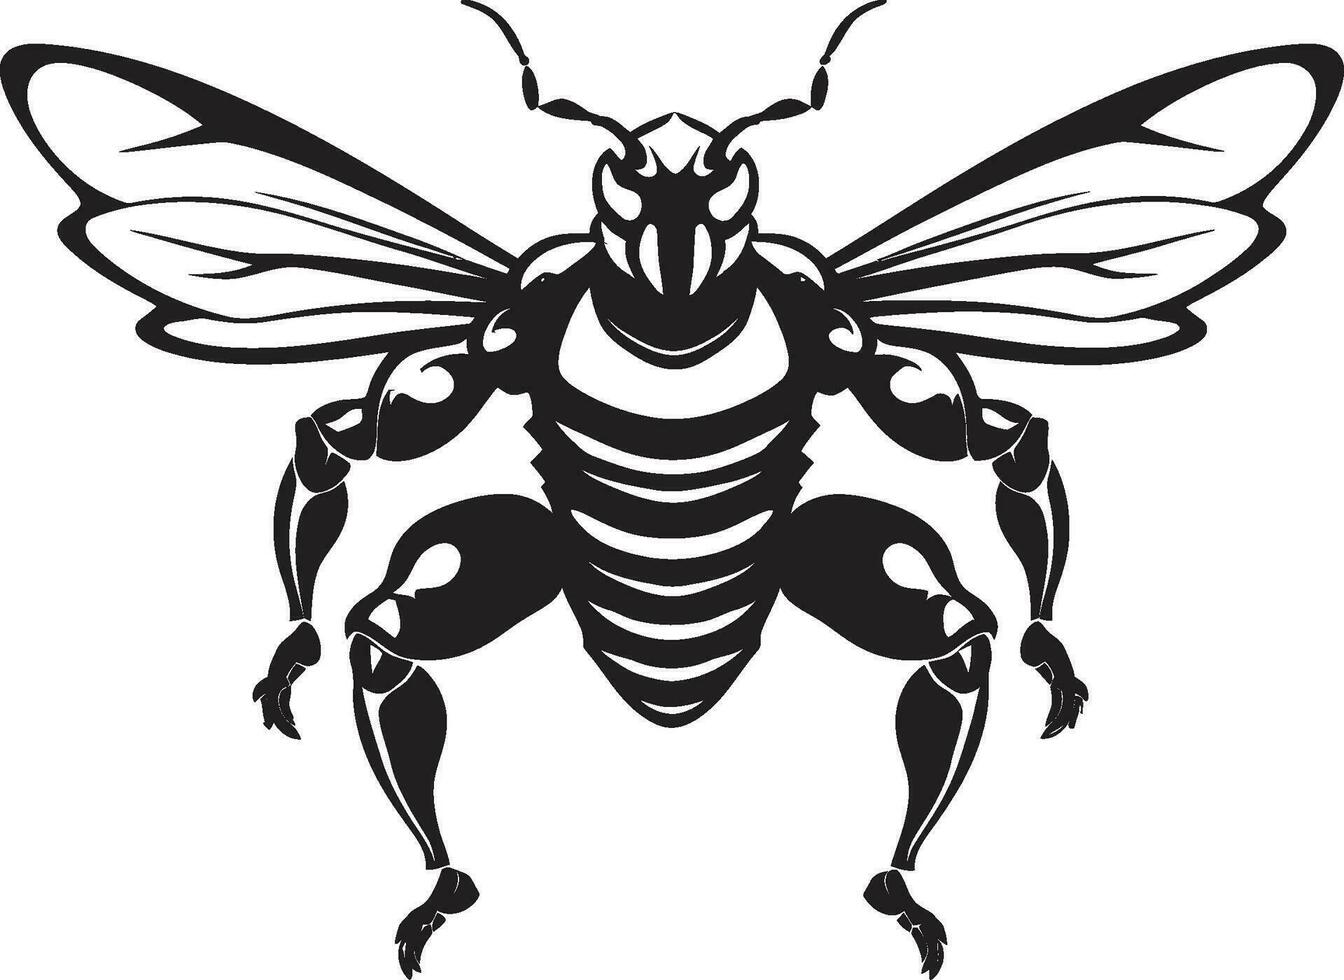 Warriors Serenity in Monochrome Logo Emblem Simplistic Sting Excellence Black Emblem vector